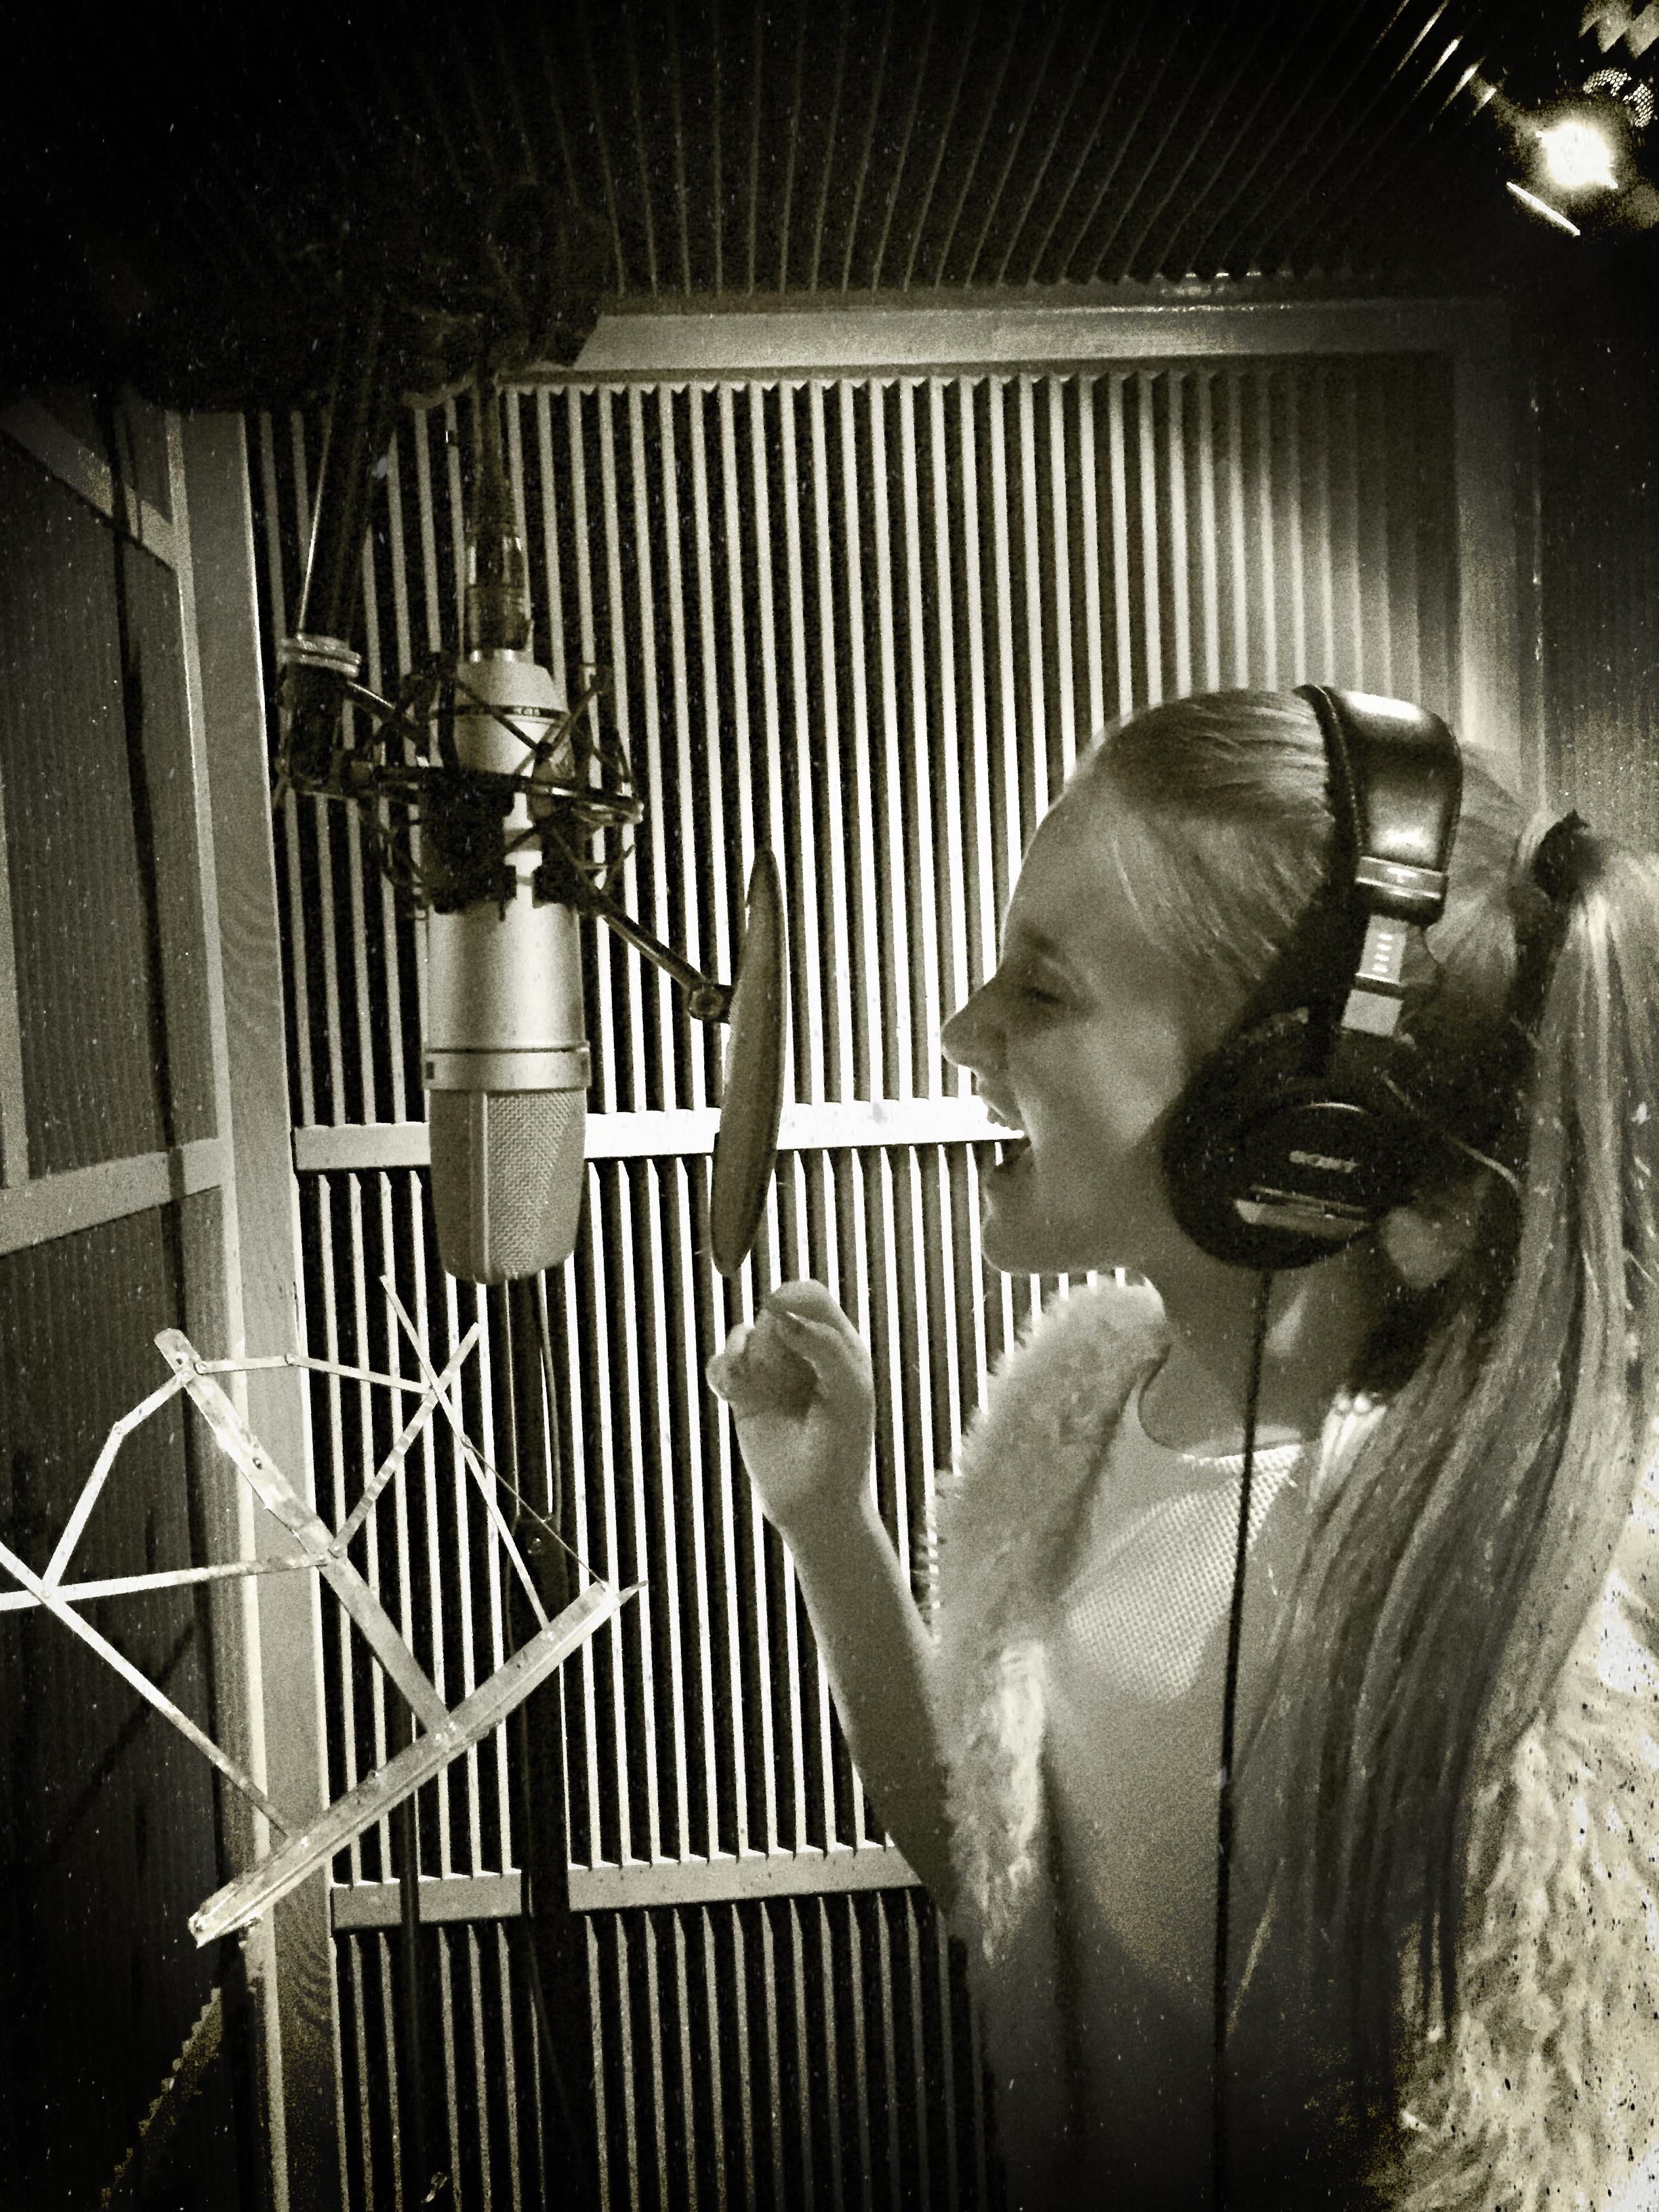 Brooke recording in the studio